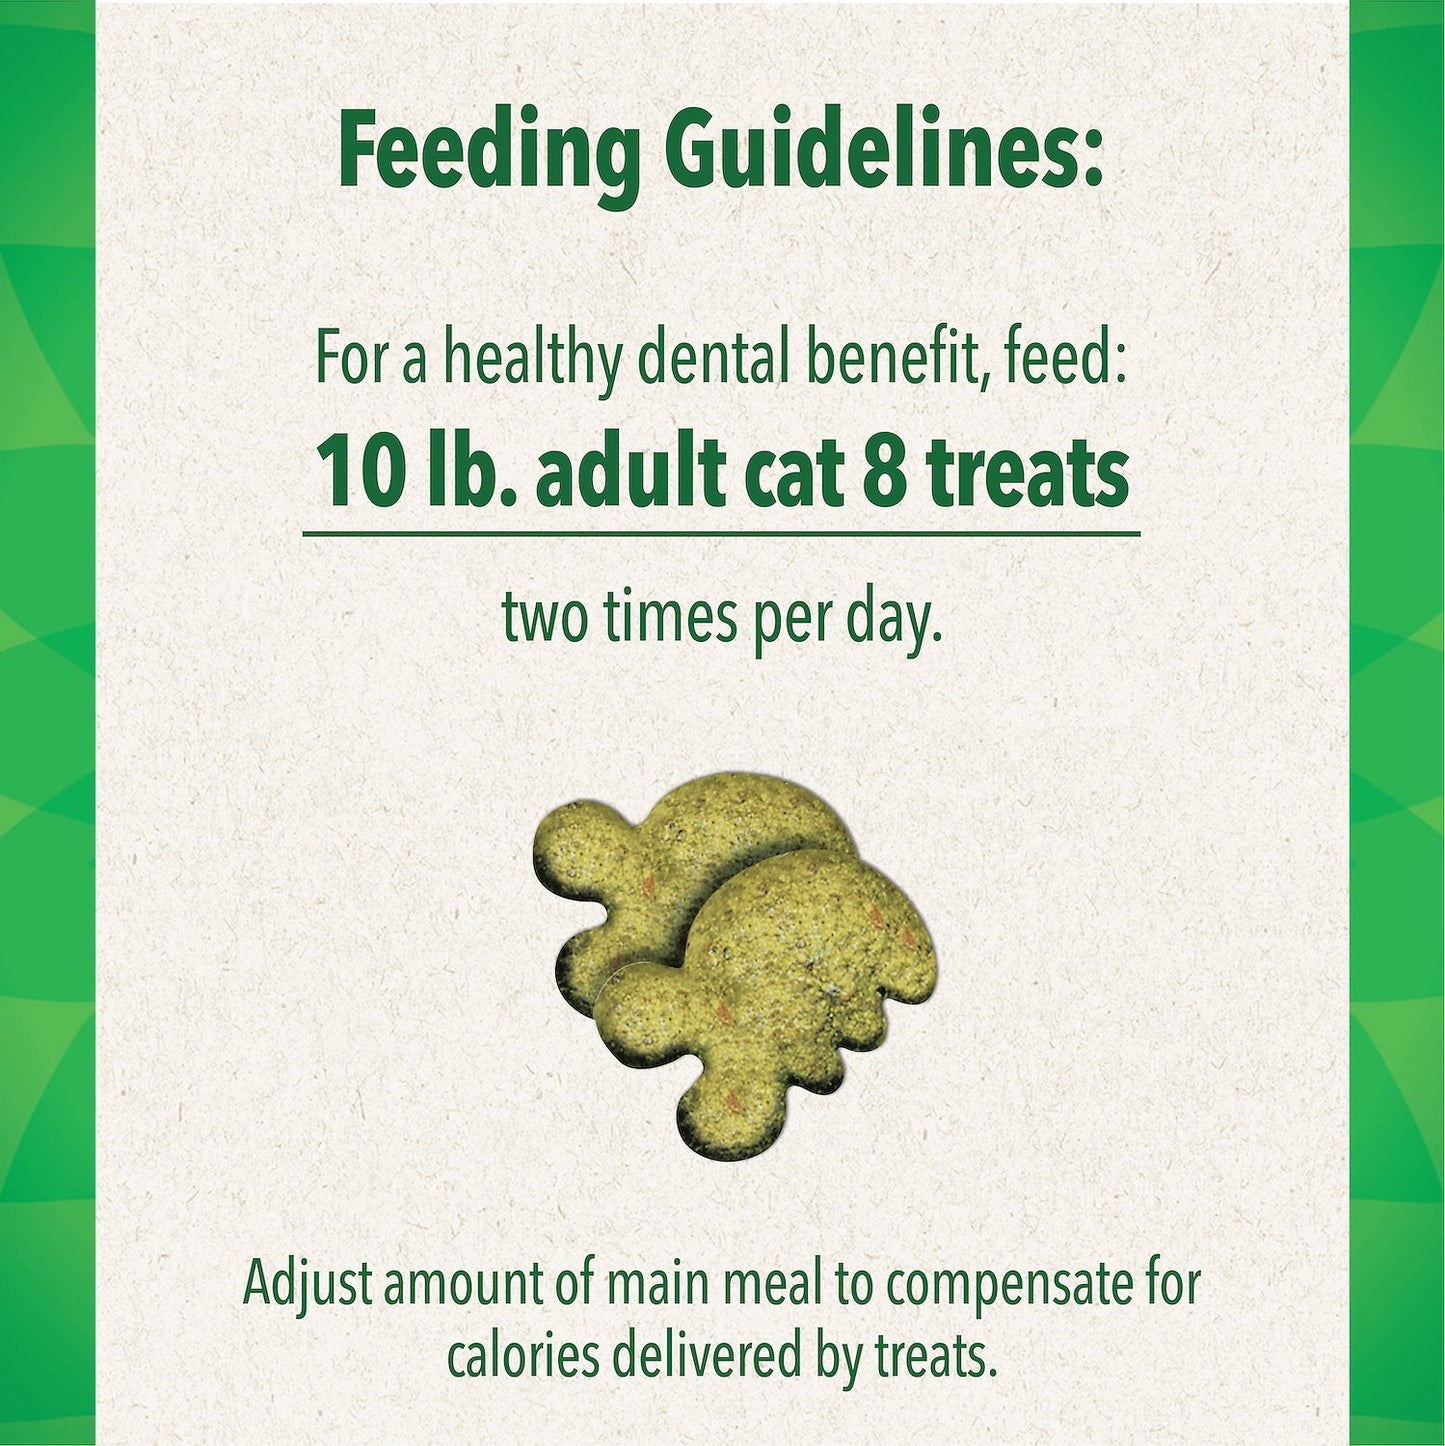 Canine's World Crunchy Cat Treats Greenies Feline Savory Salmon Flavor Adult Dental Cat Treats, Greenies